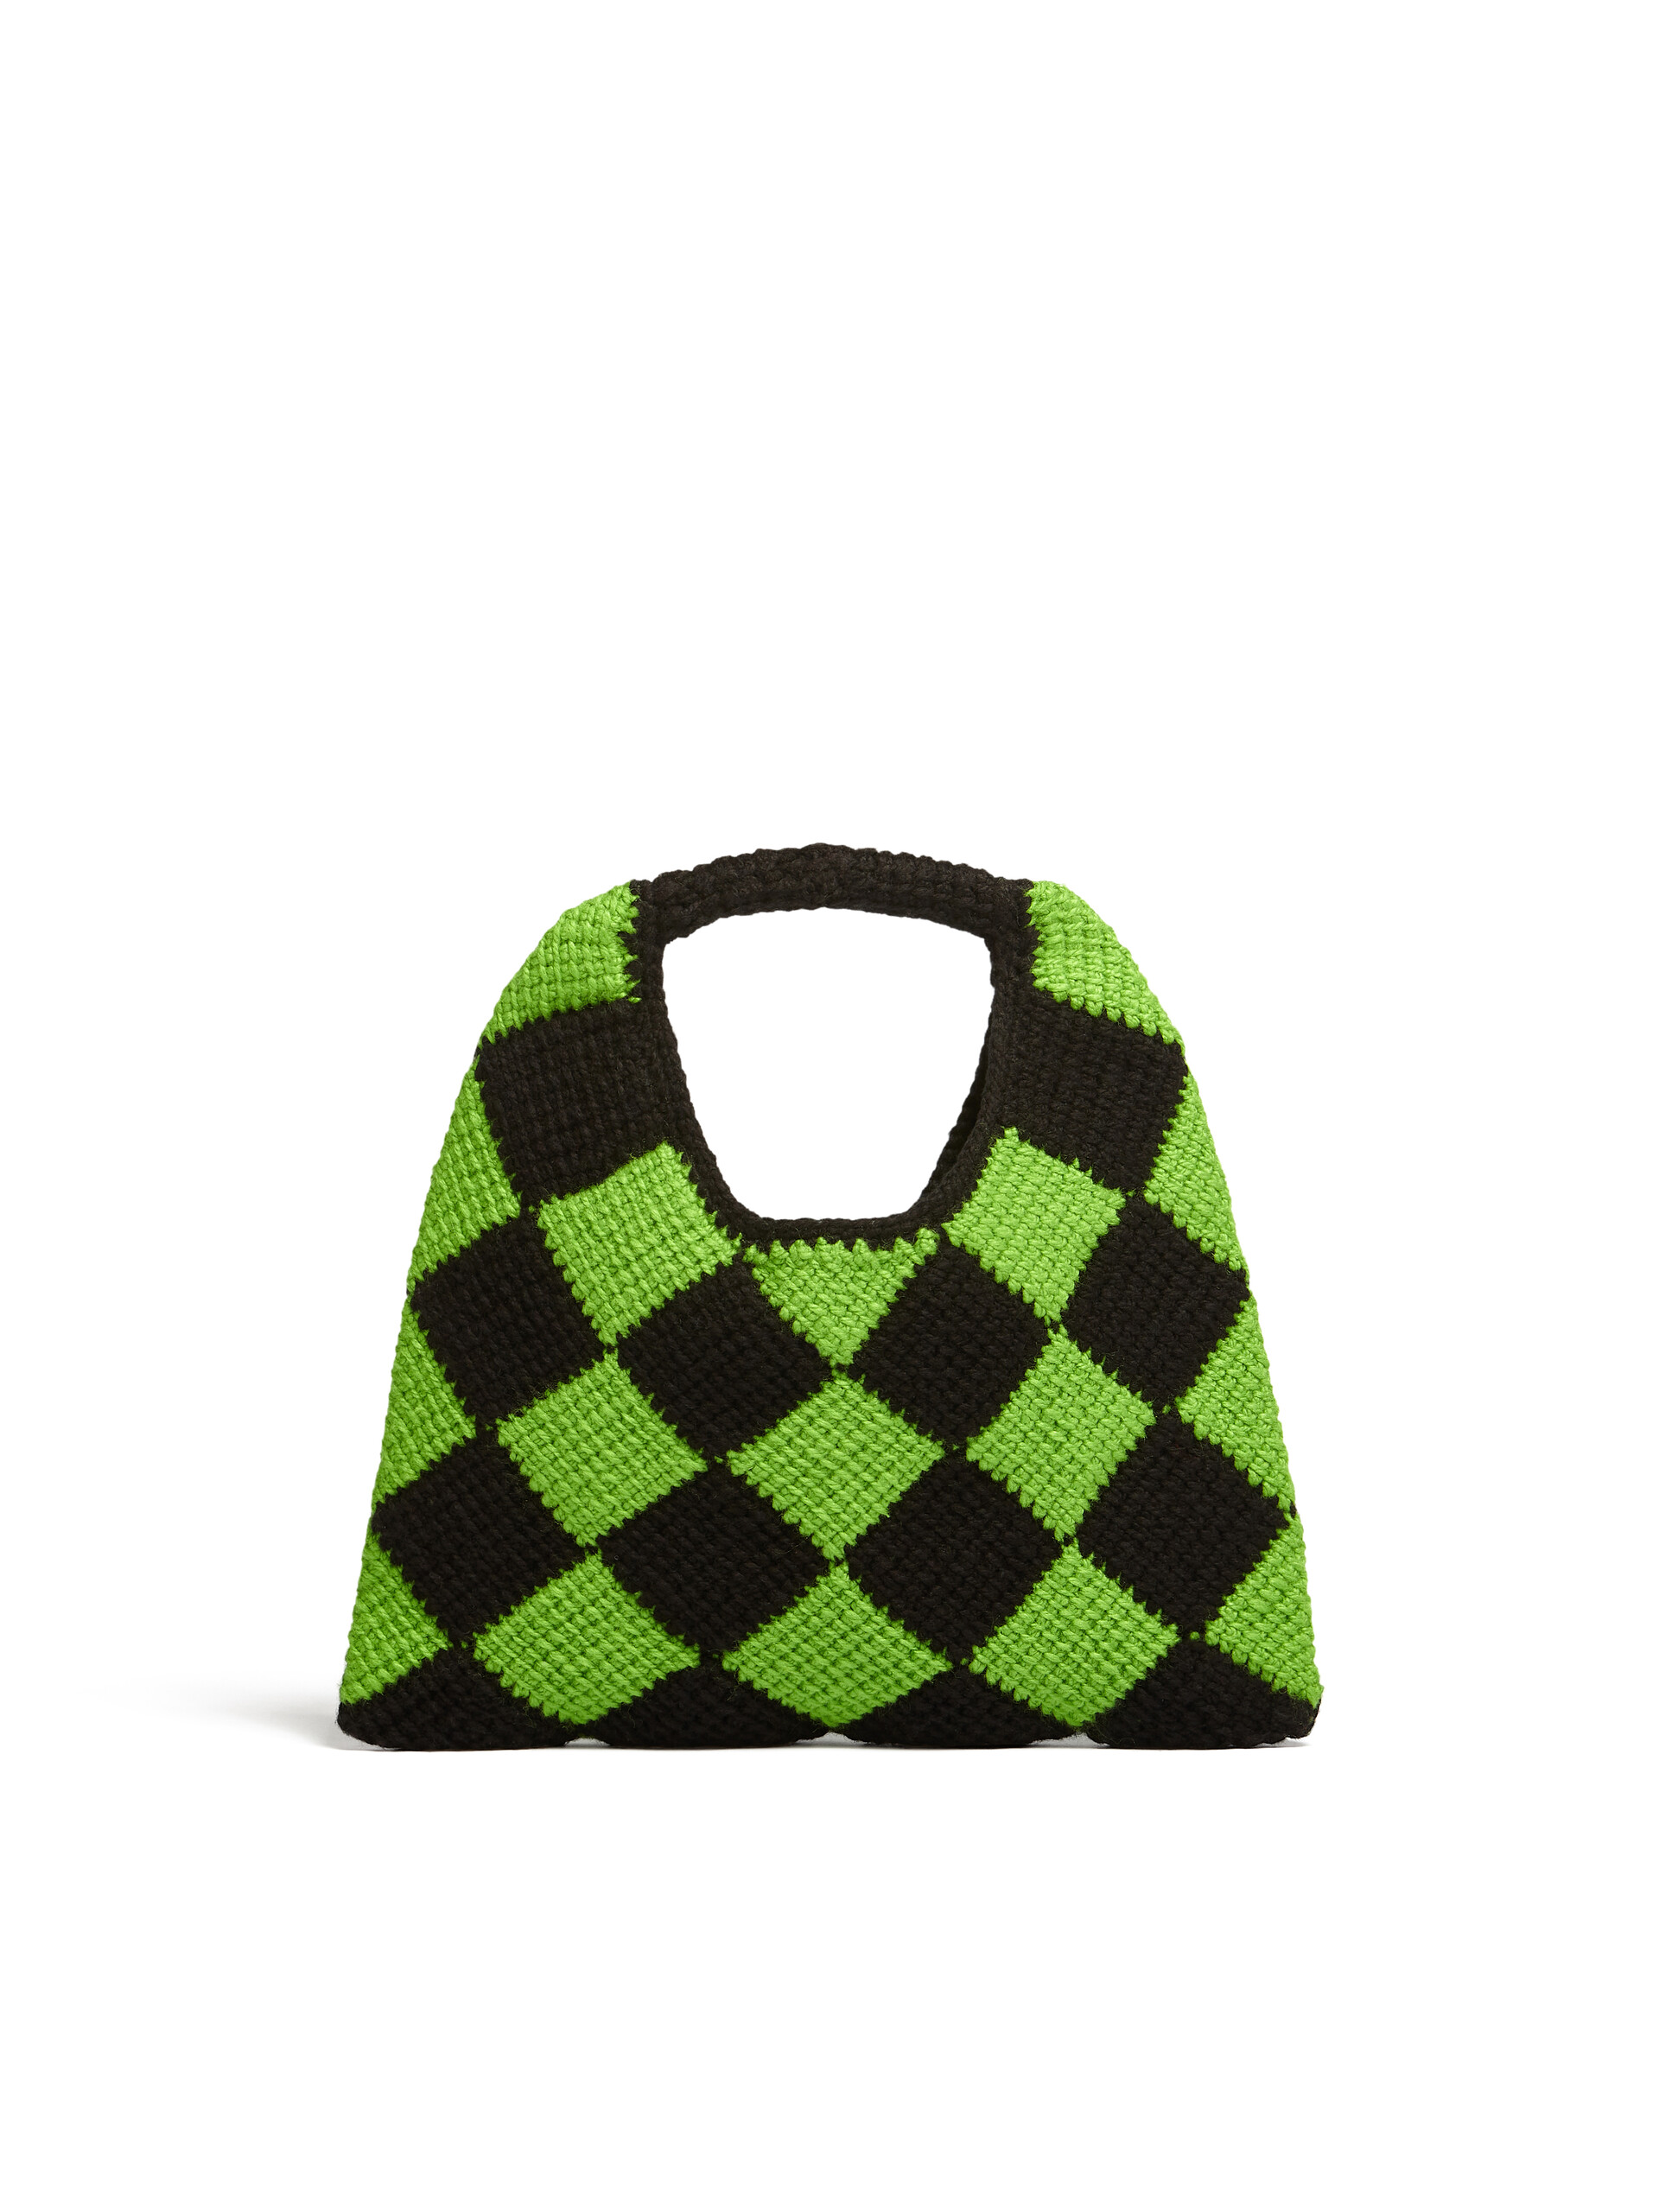 MARNI MARKET DIAMOND medium bag in green and black tech wool - Bags - Image 3